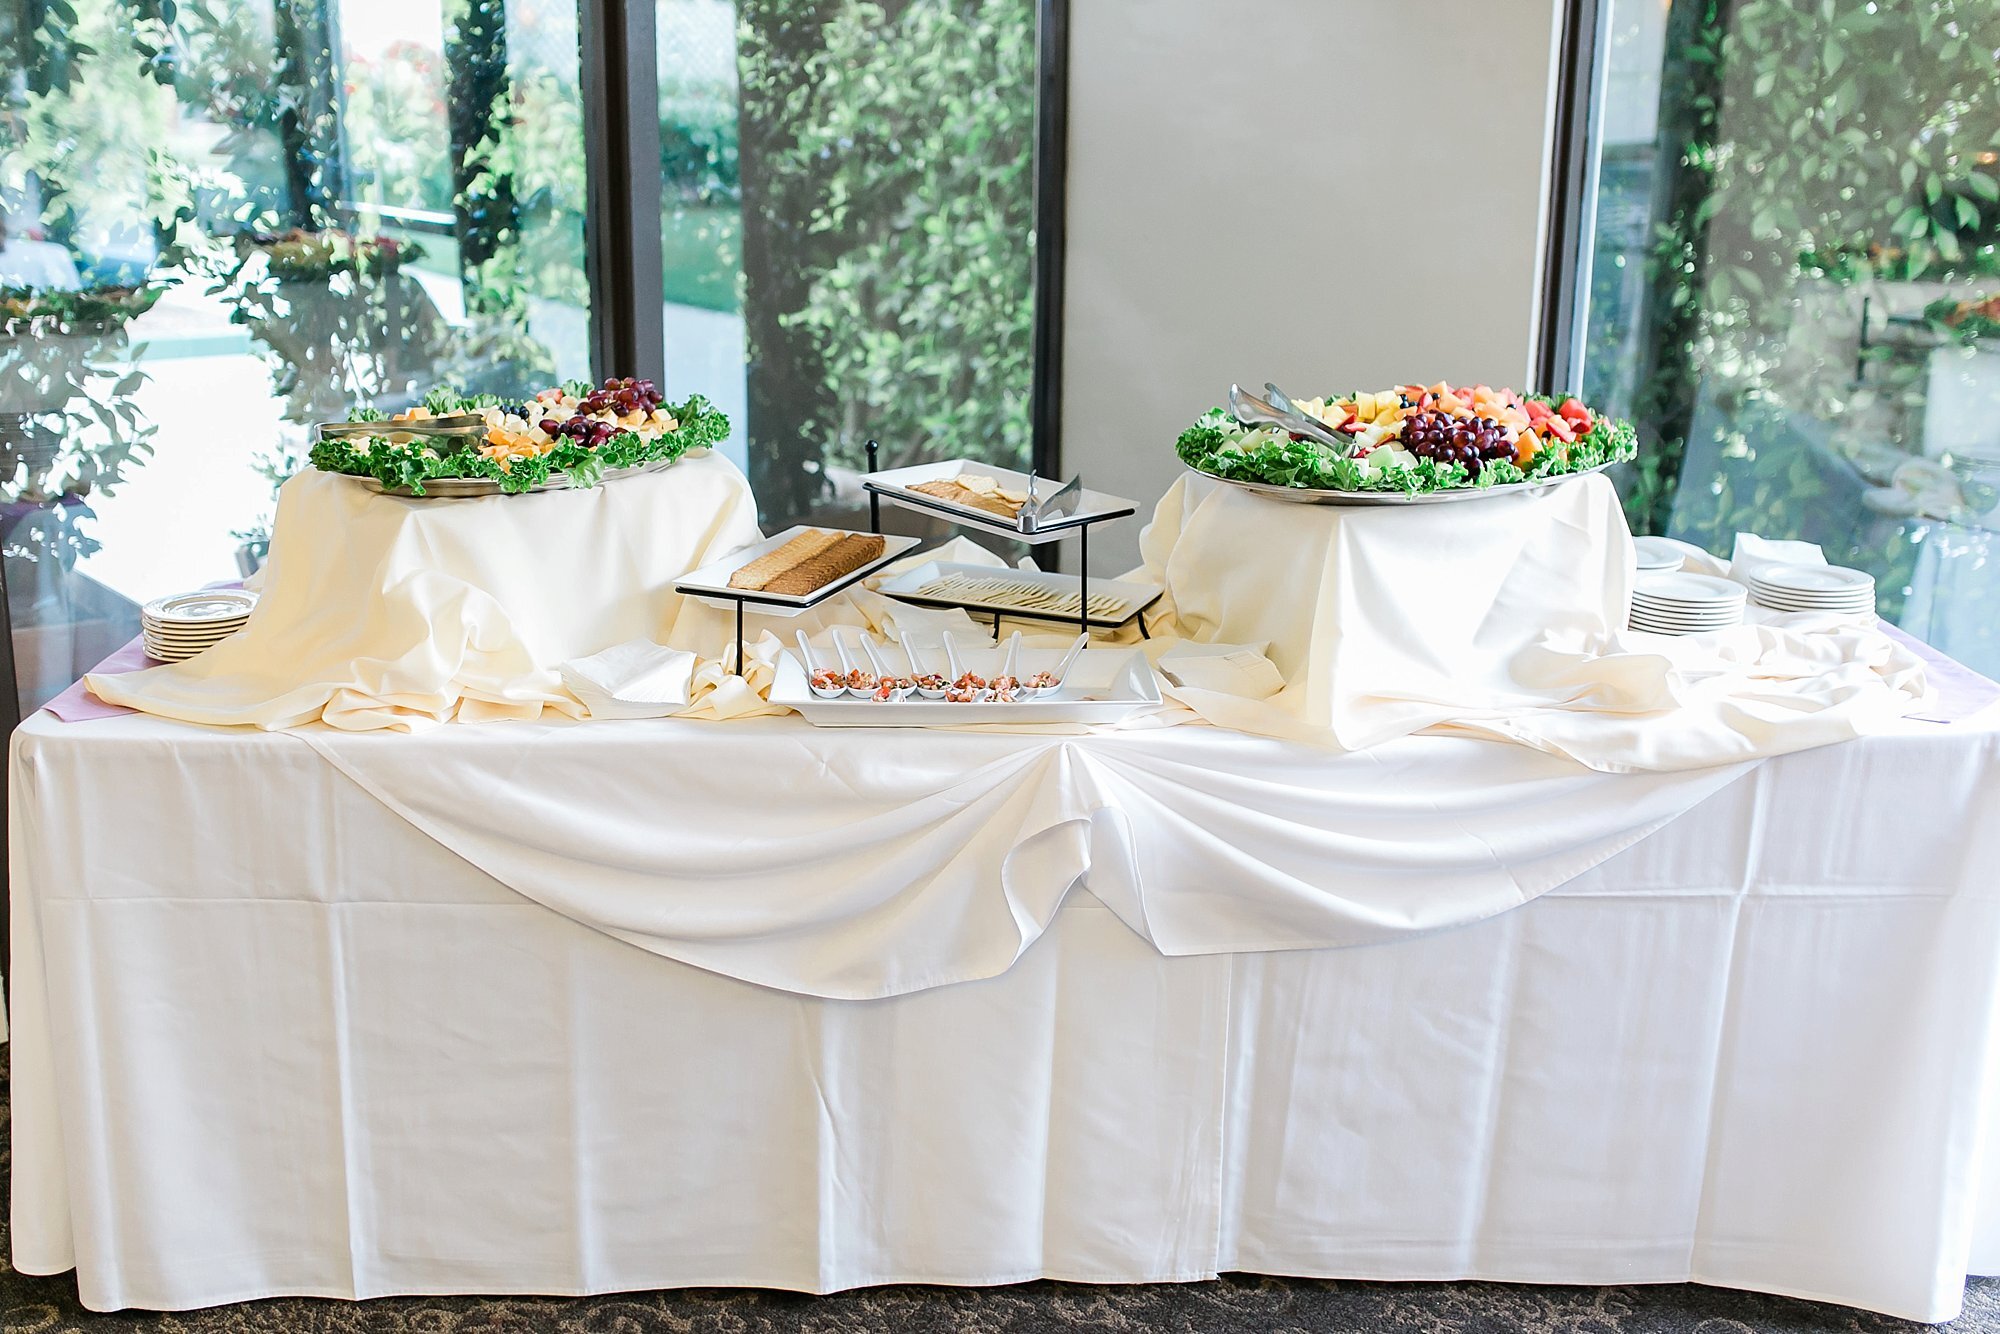  wedding cake and dessert table 